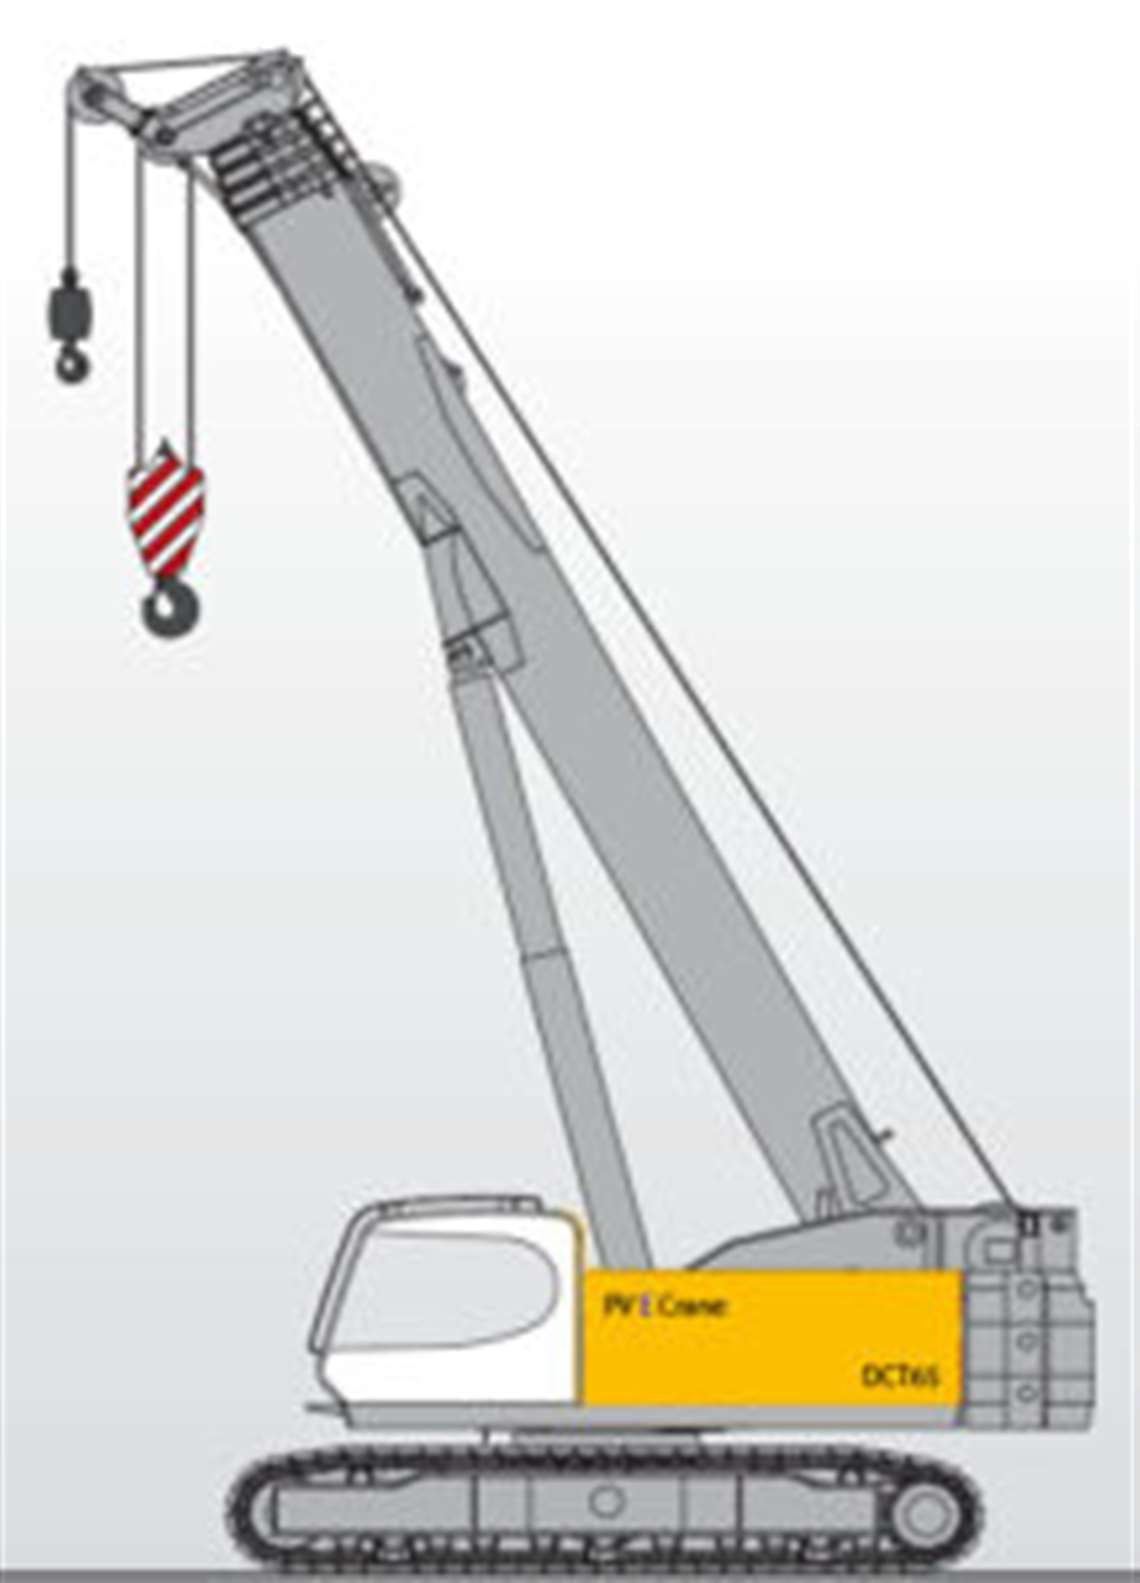 The PVE Crane model ECT65 is a 65 tonne capacity telescopic boom battery-electric crawler crane